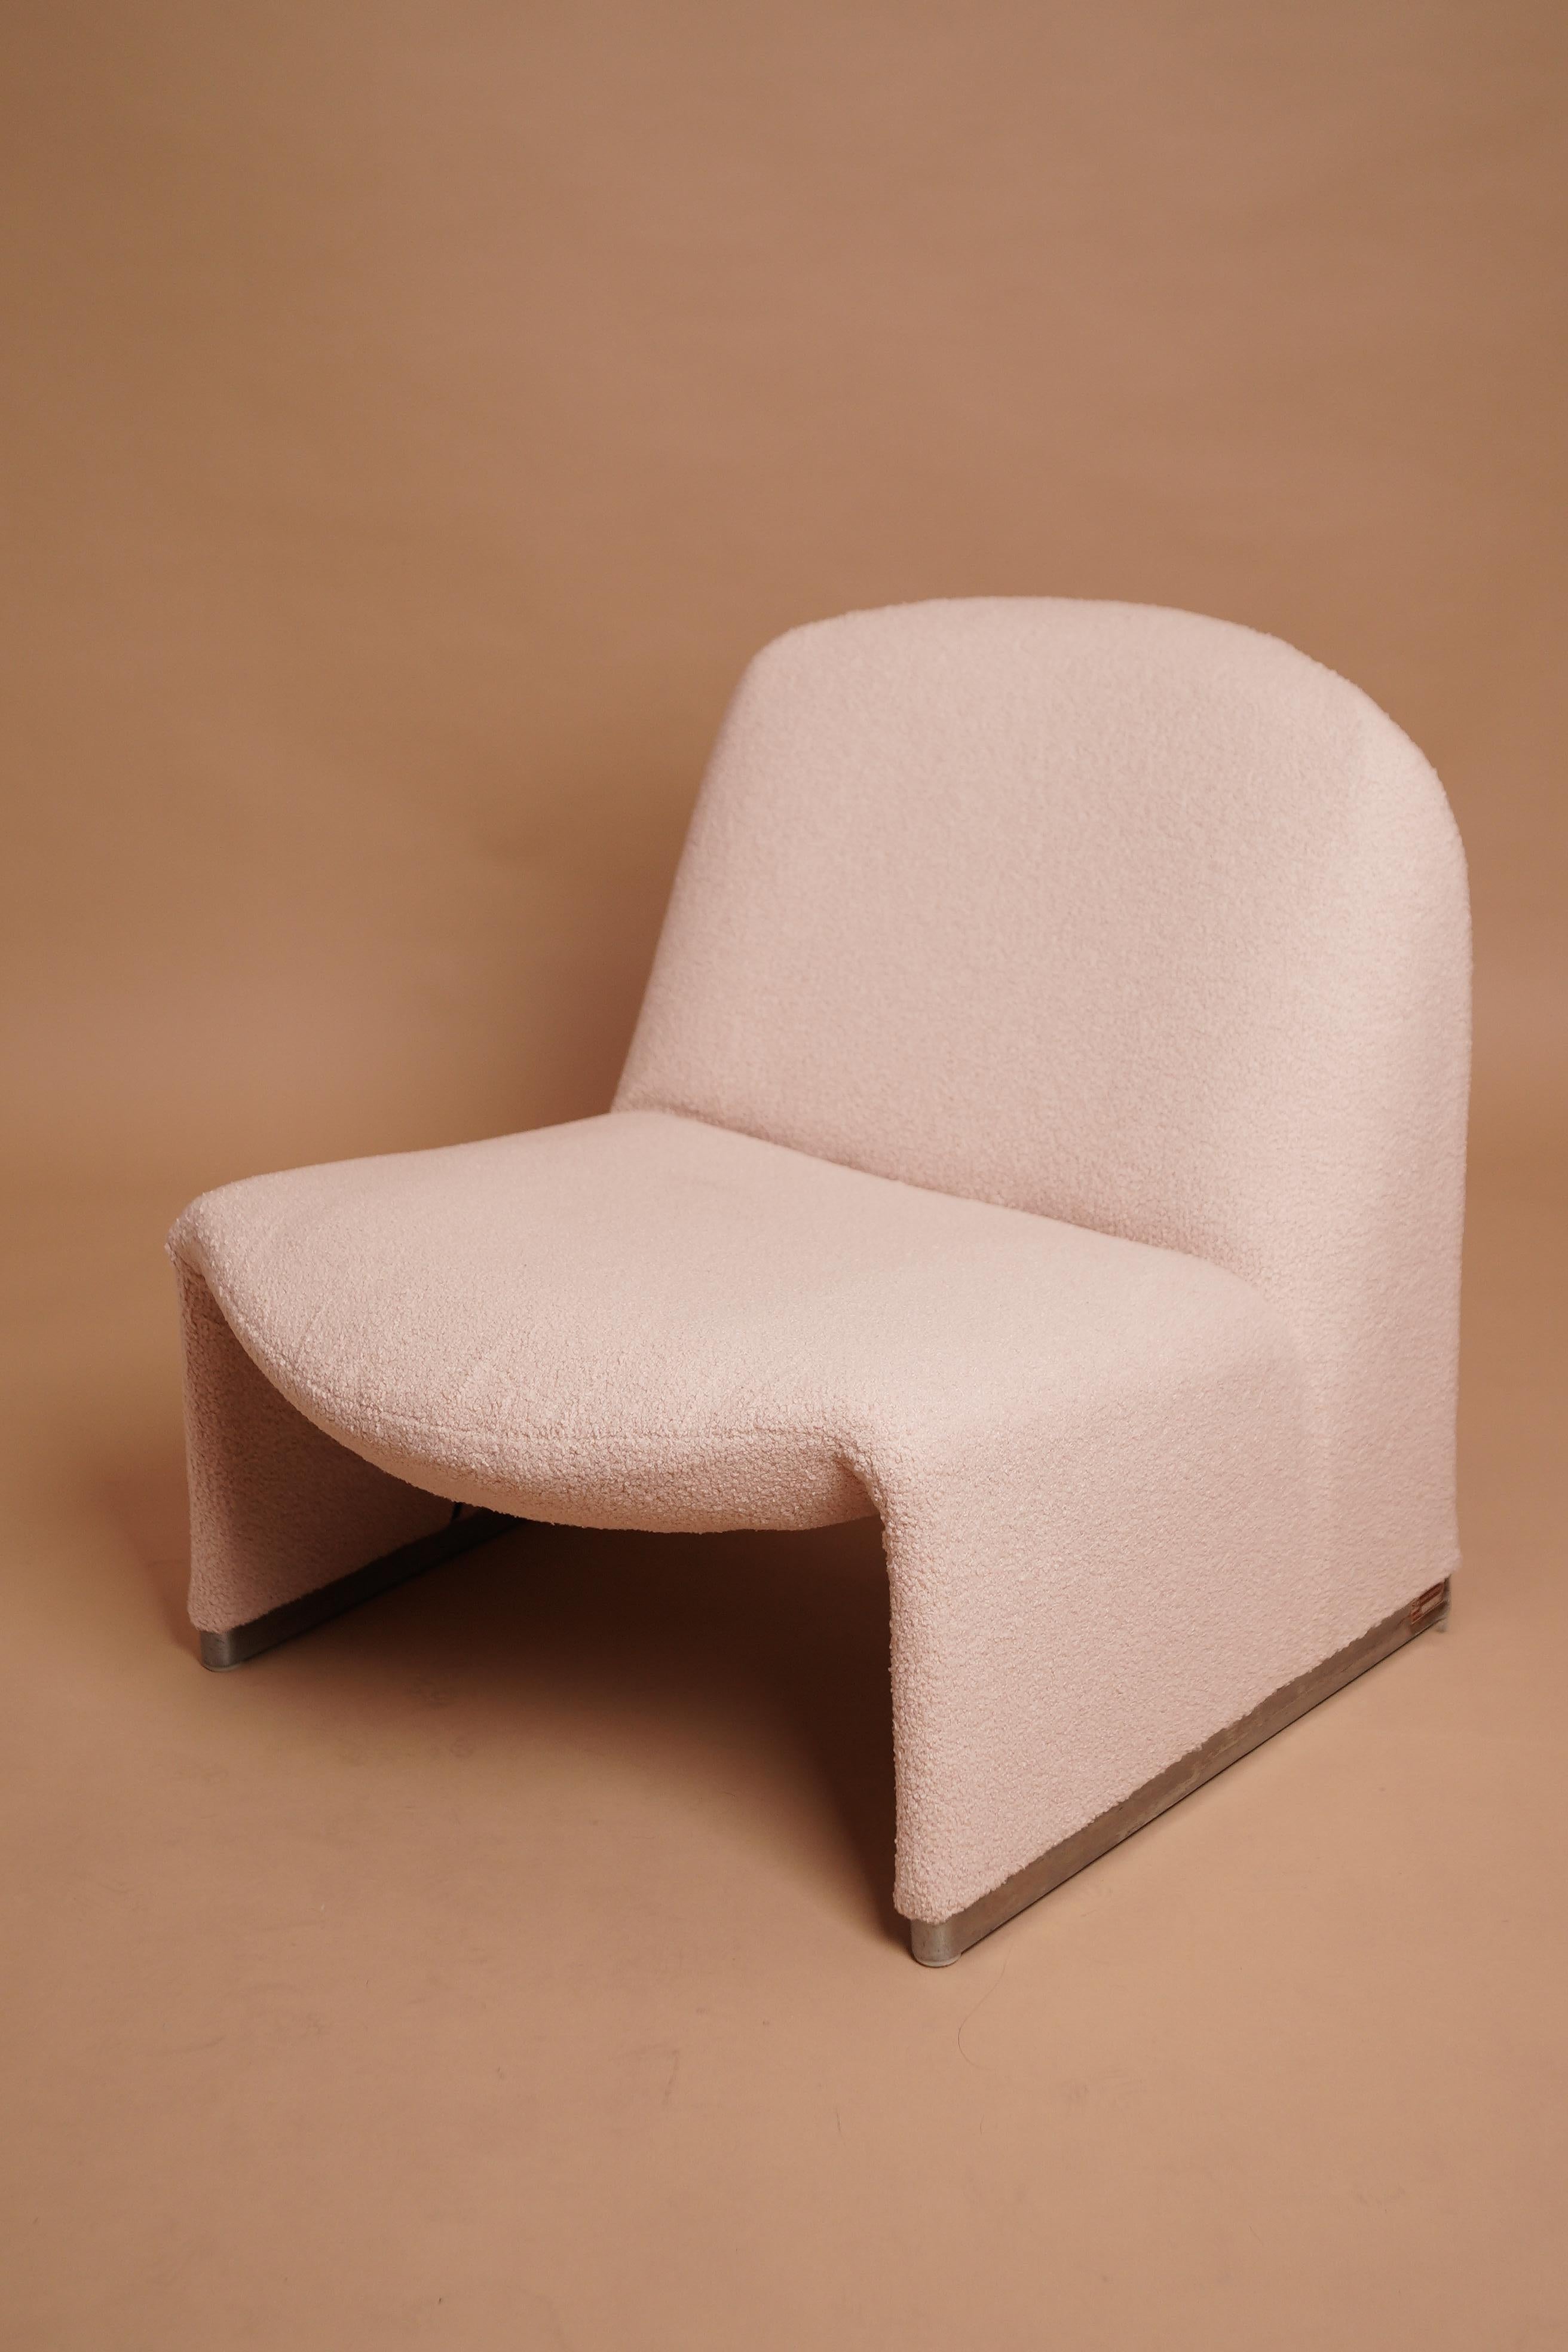 Giancarlo Piretti Alky Chair for Castelli1970s